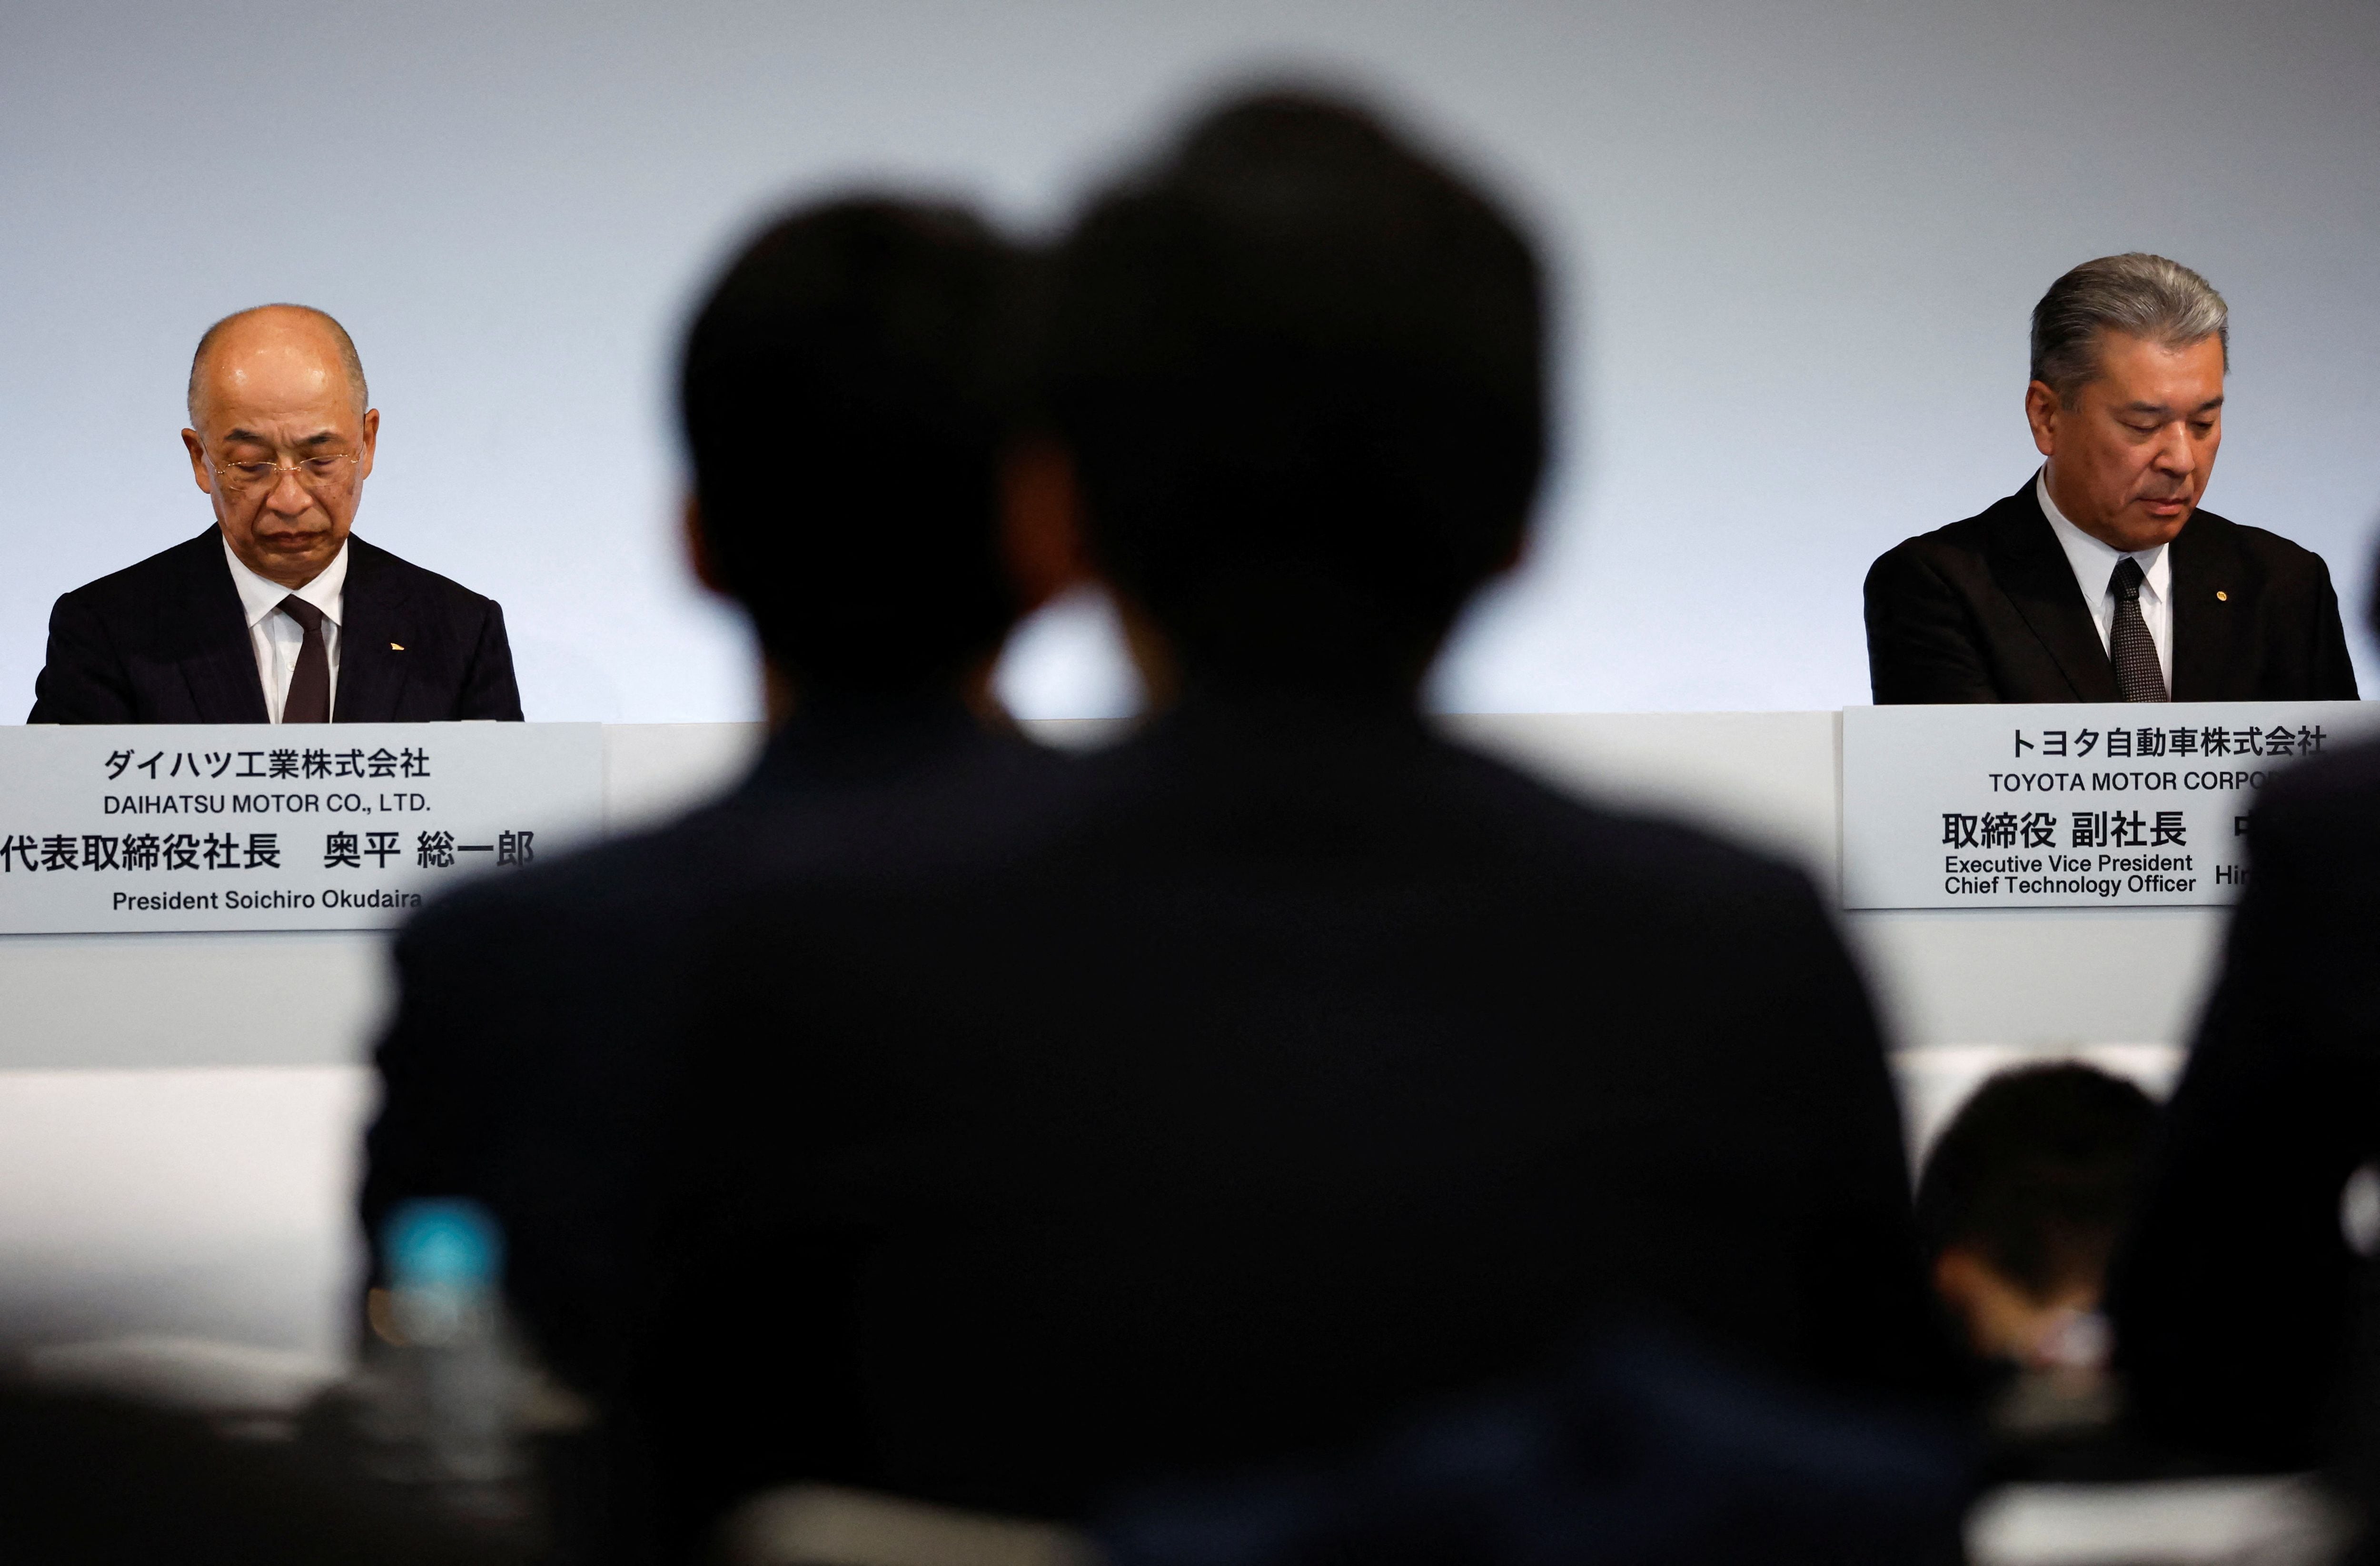 Presidente de Daihatsu Motor Soichiro Okudaira y el Vice Presidente Ejecutivo de Toyota Motor, Hiroki Nakajima. REUTERS/Issei Kato